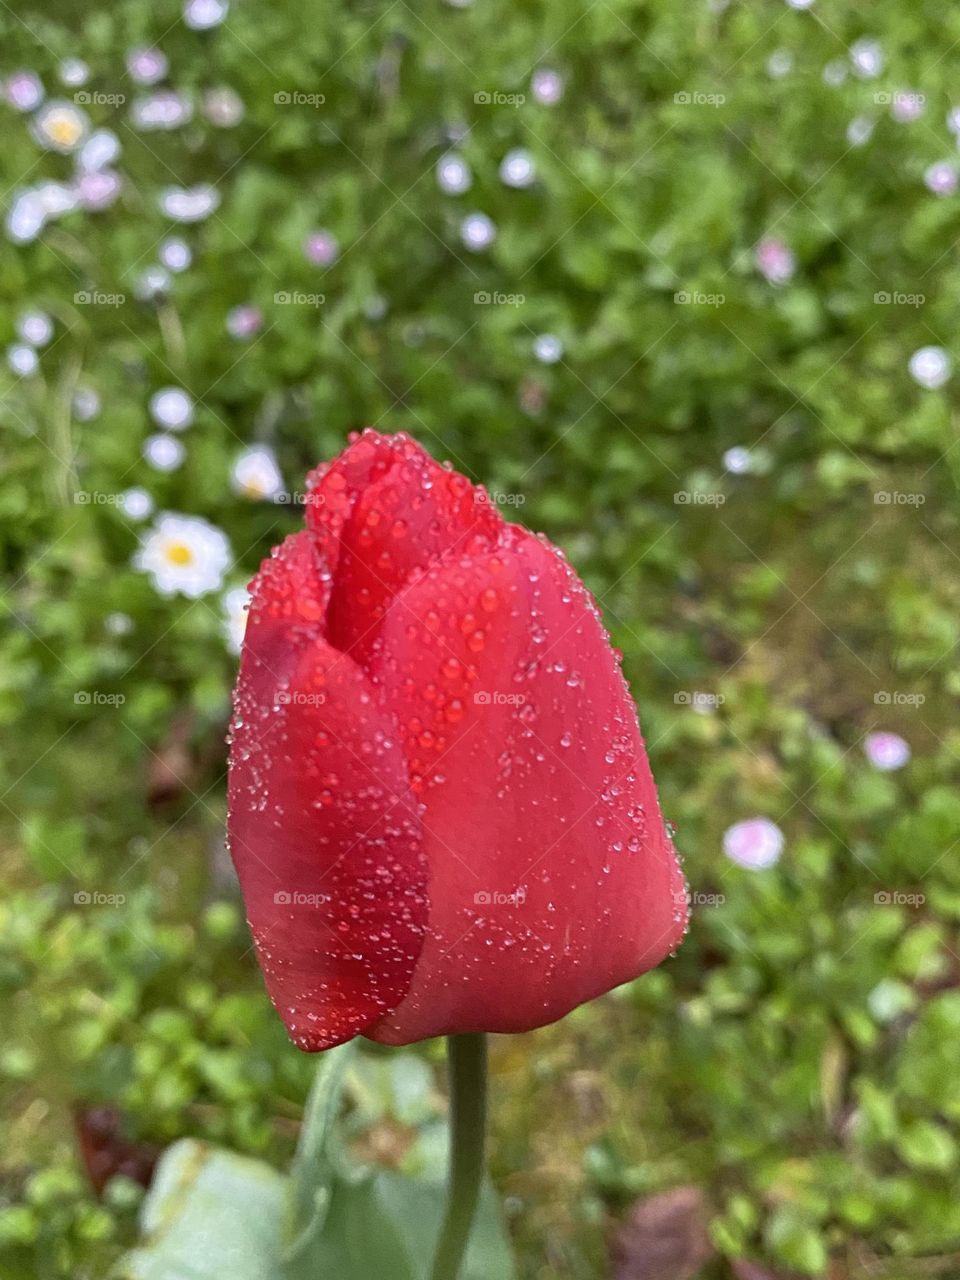 Raindrops on a tulip 